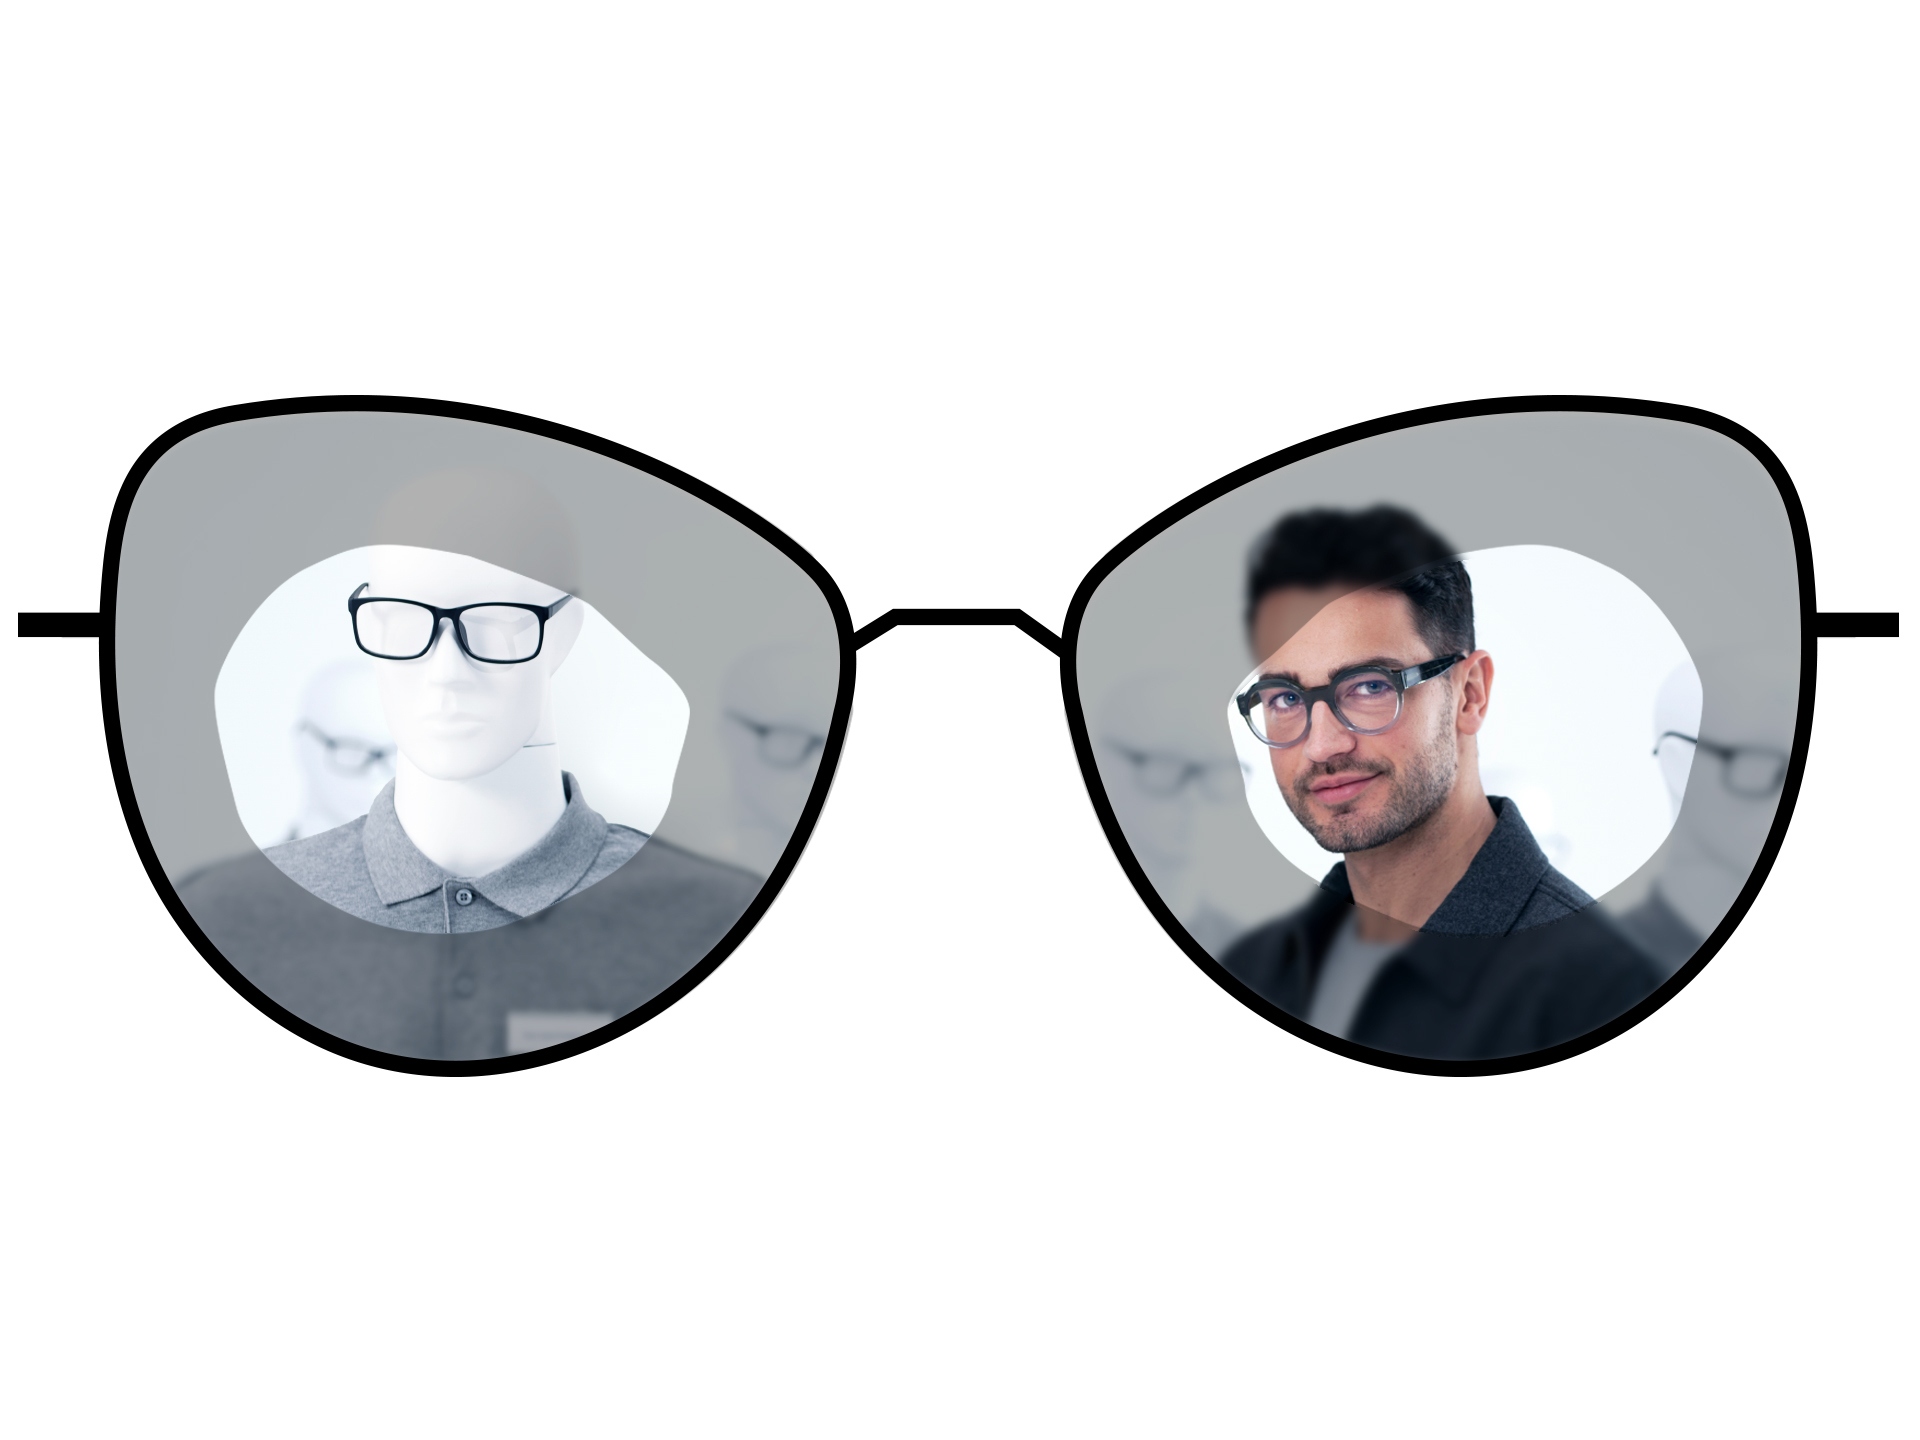 Glasses illustration showing the blurry zones of standard single vision lenses in comparison to the large clear zones of ZEISS Single Vision ClearView lenses